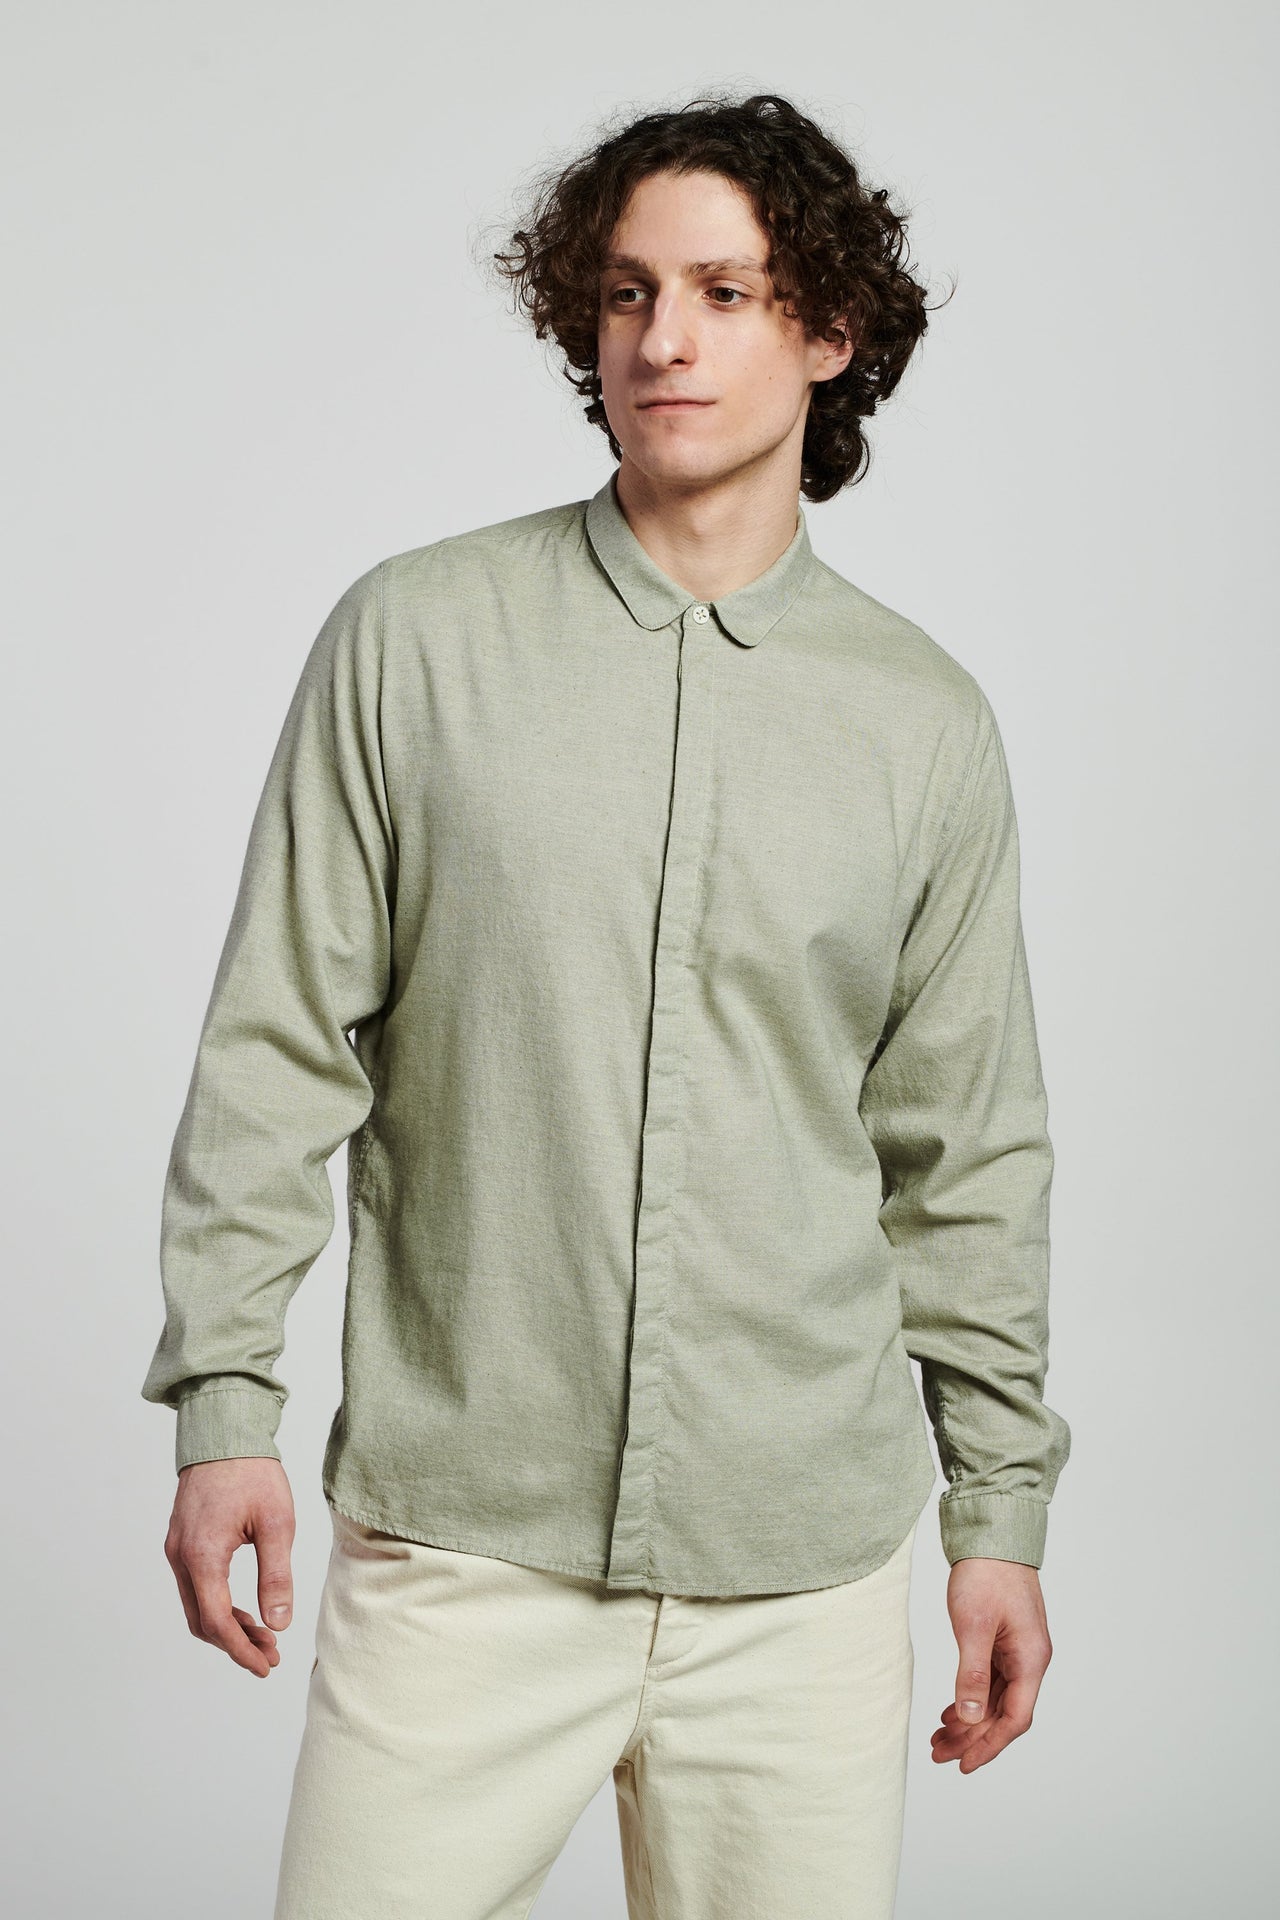 Cute Round Collar Shirt in a Soft Green Japanese Organic Oxford